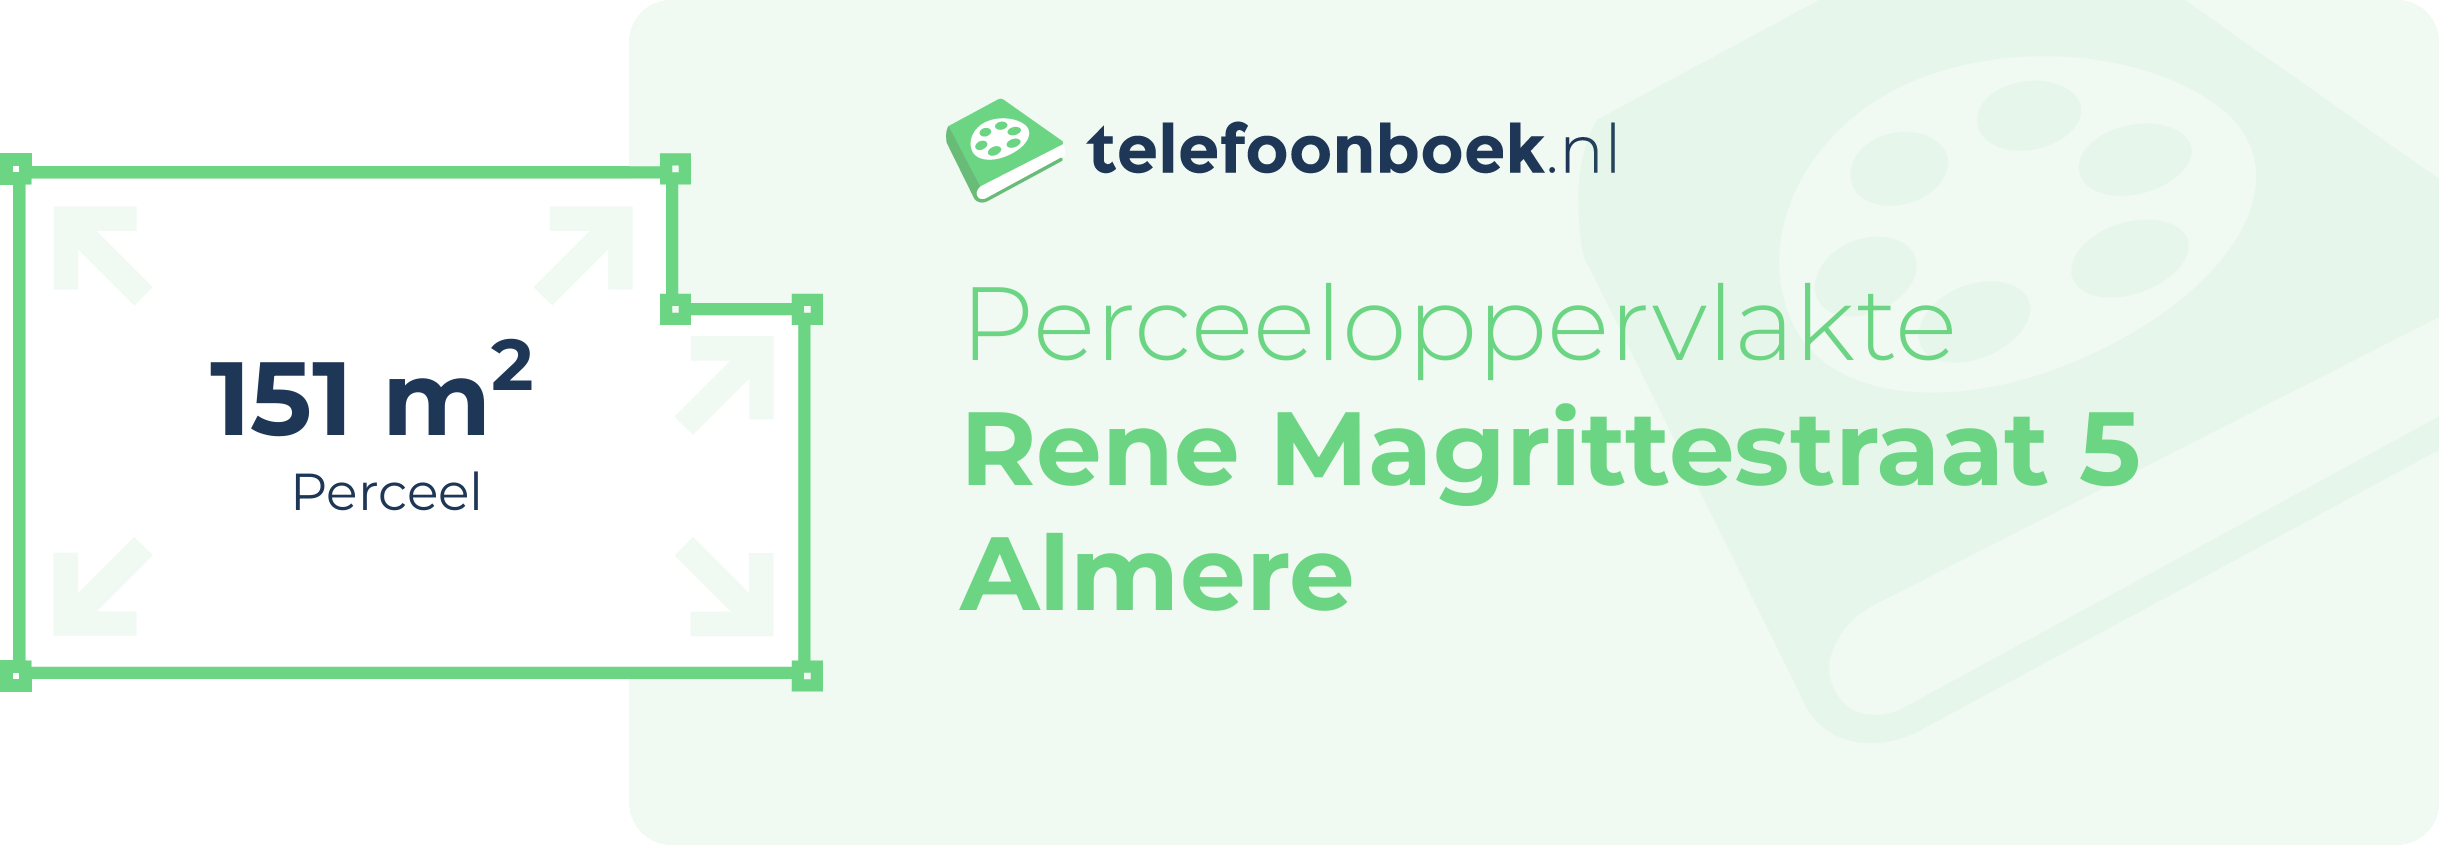 Perceeloppervlakte Rene Magrittestraat 5 Almere